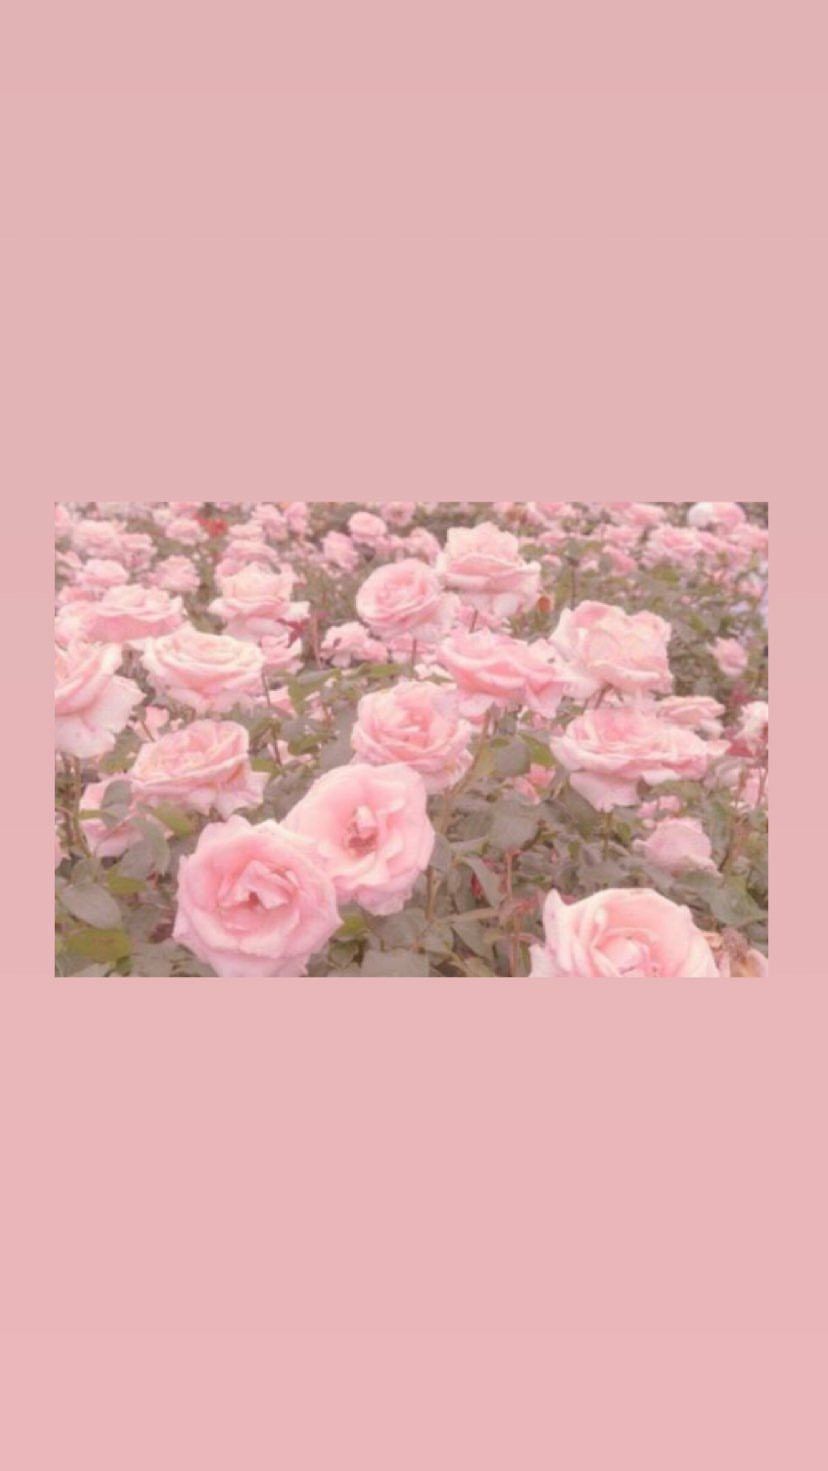 BLACKPINK Rosé Instagram Story. Aesthetic Iphone Wallpaper, Blackpink Rose, Pink Aesthetic